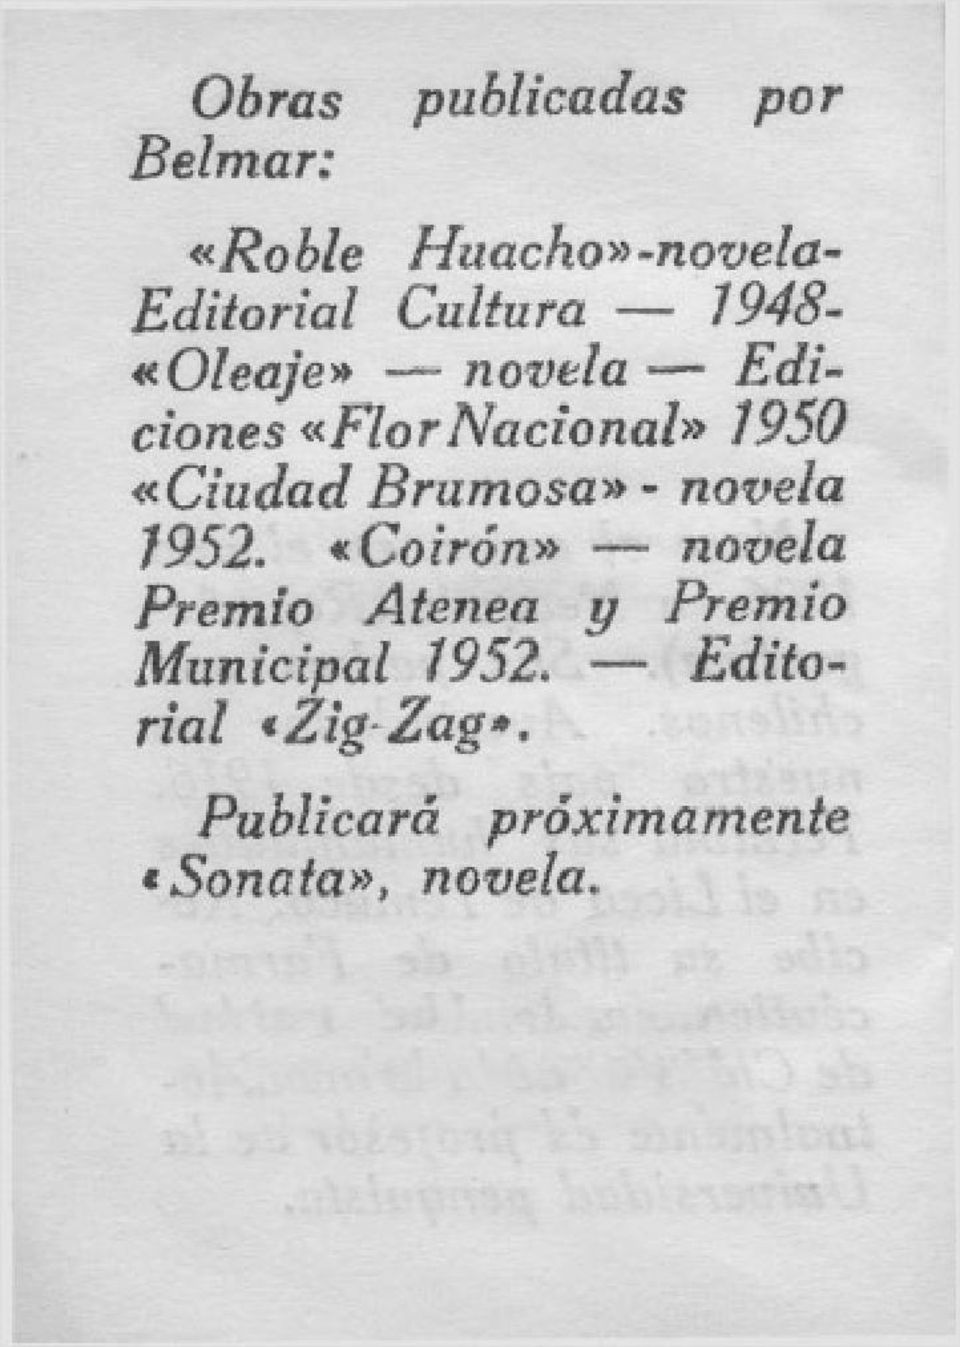 ccflorivacionab 1950 uciudad Brumosam - novela 7952.